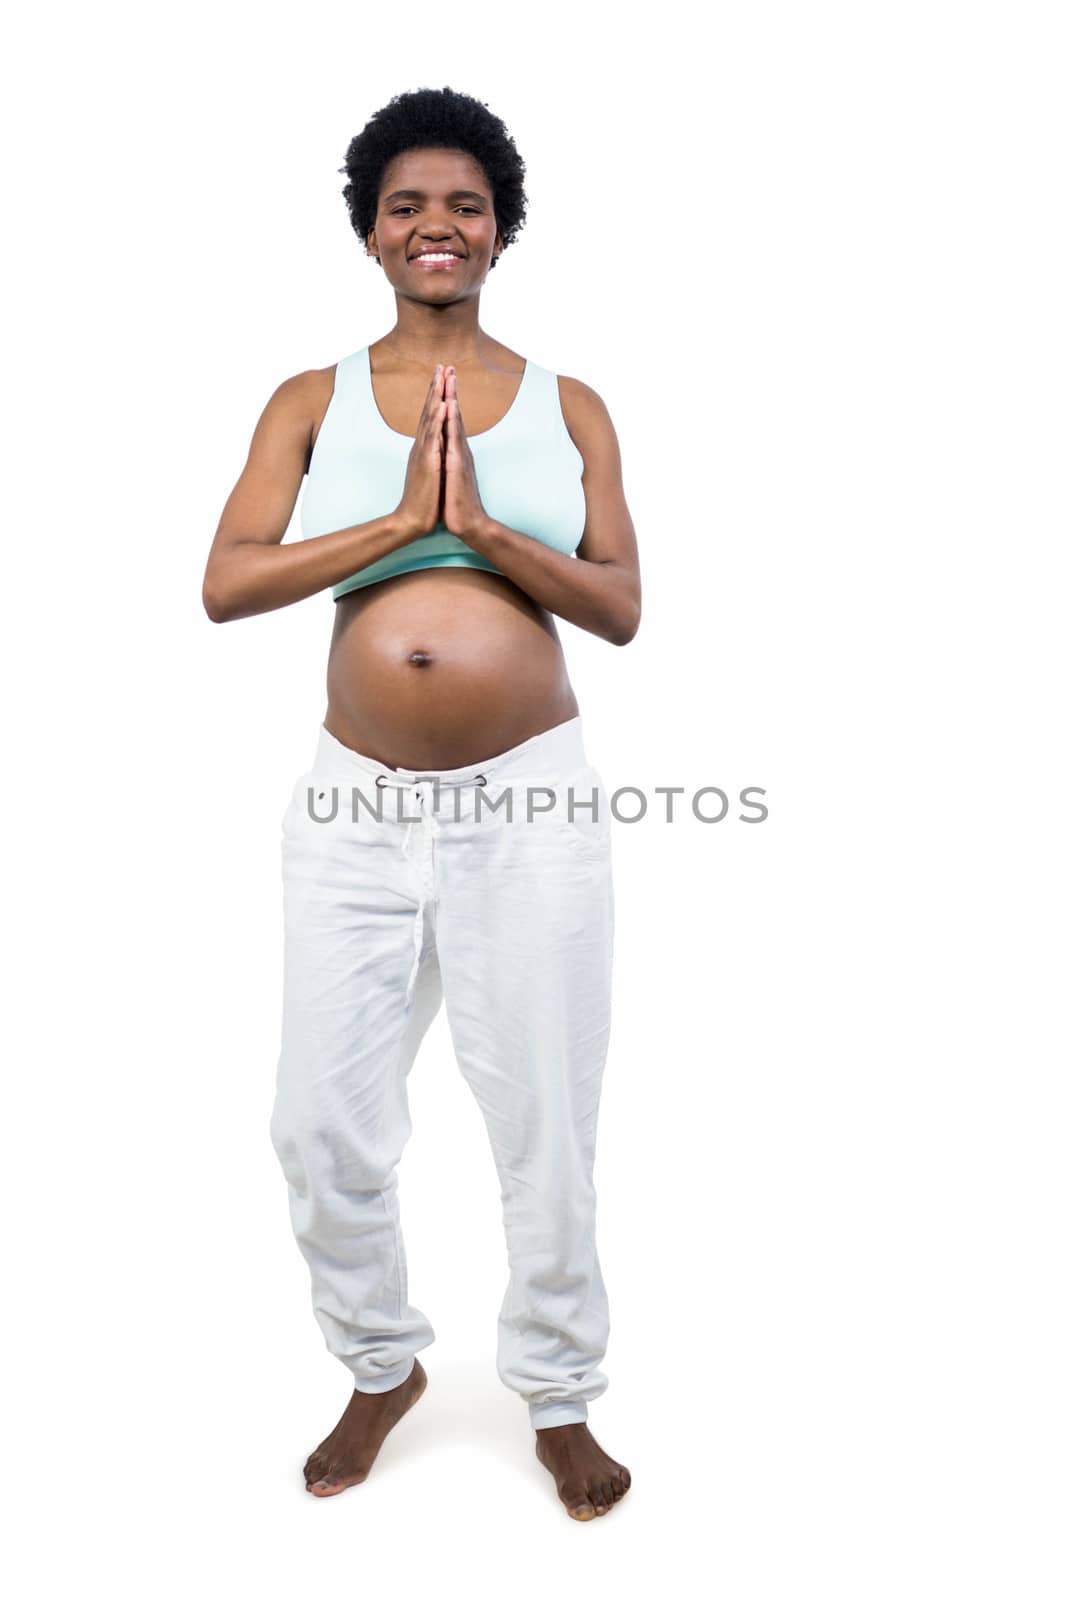 Pregnant woman doing yoga exercise on white background